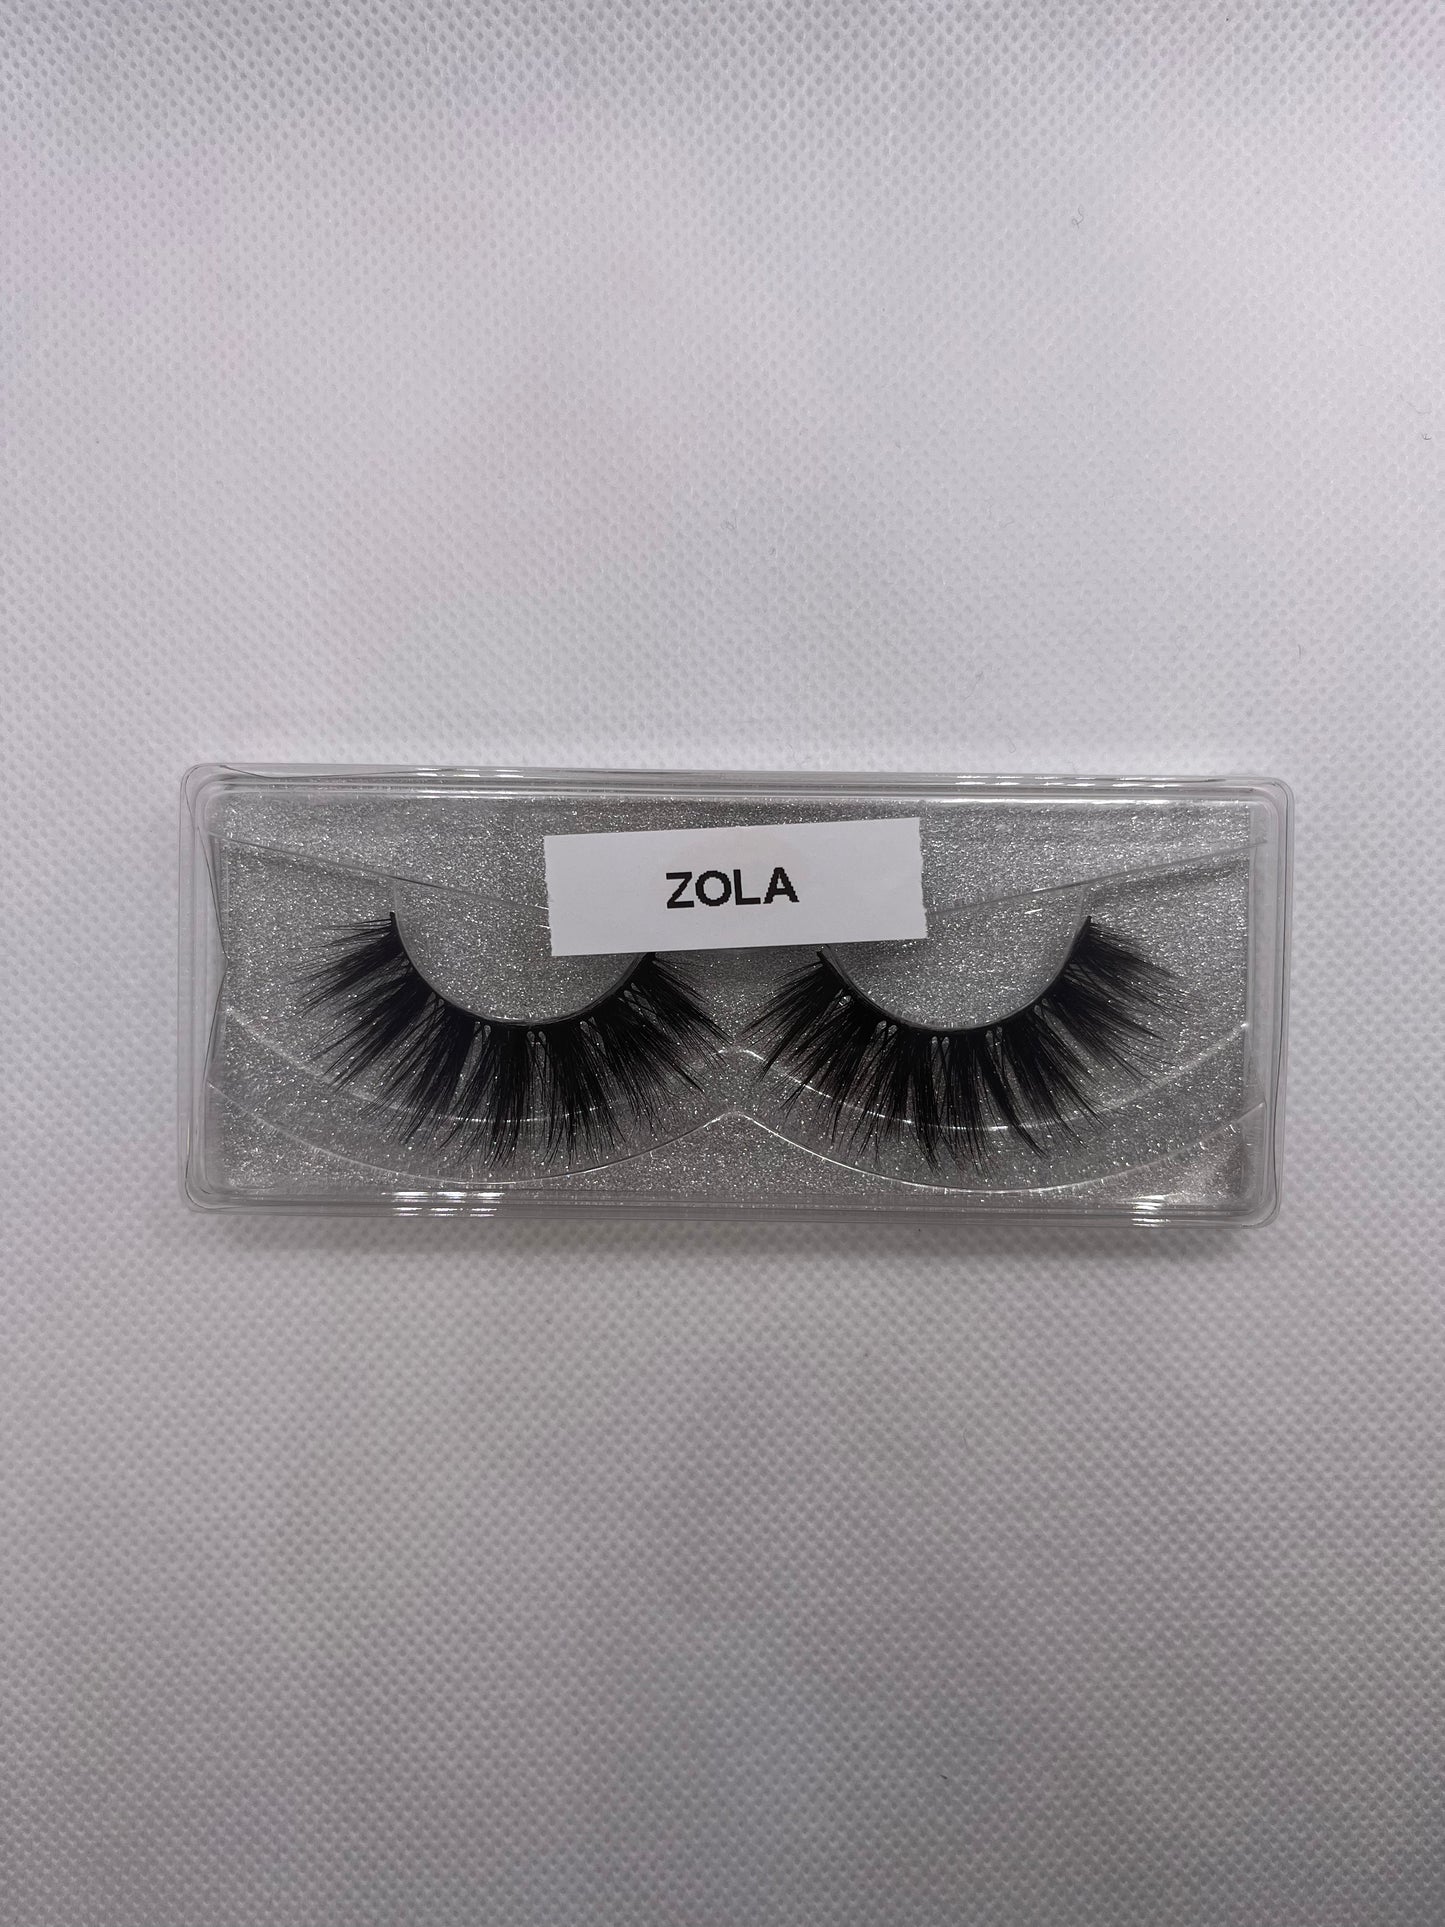 Zola lashes